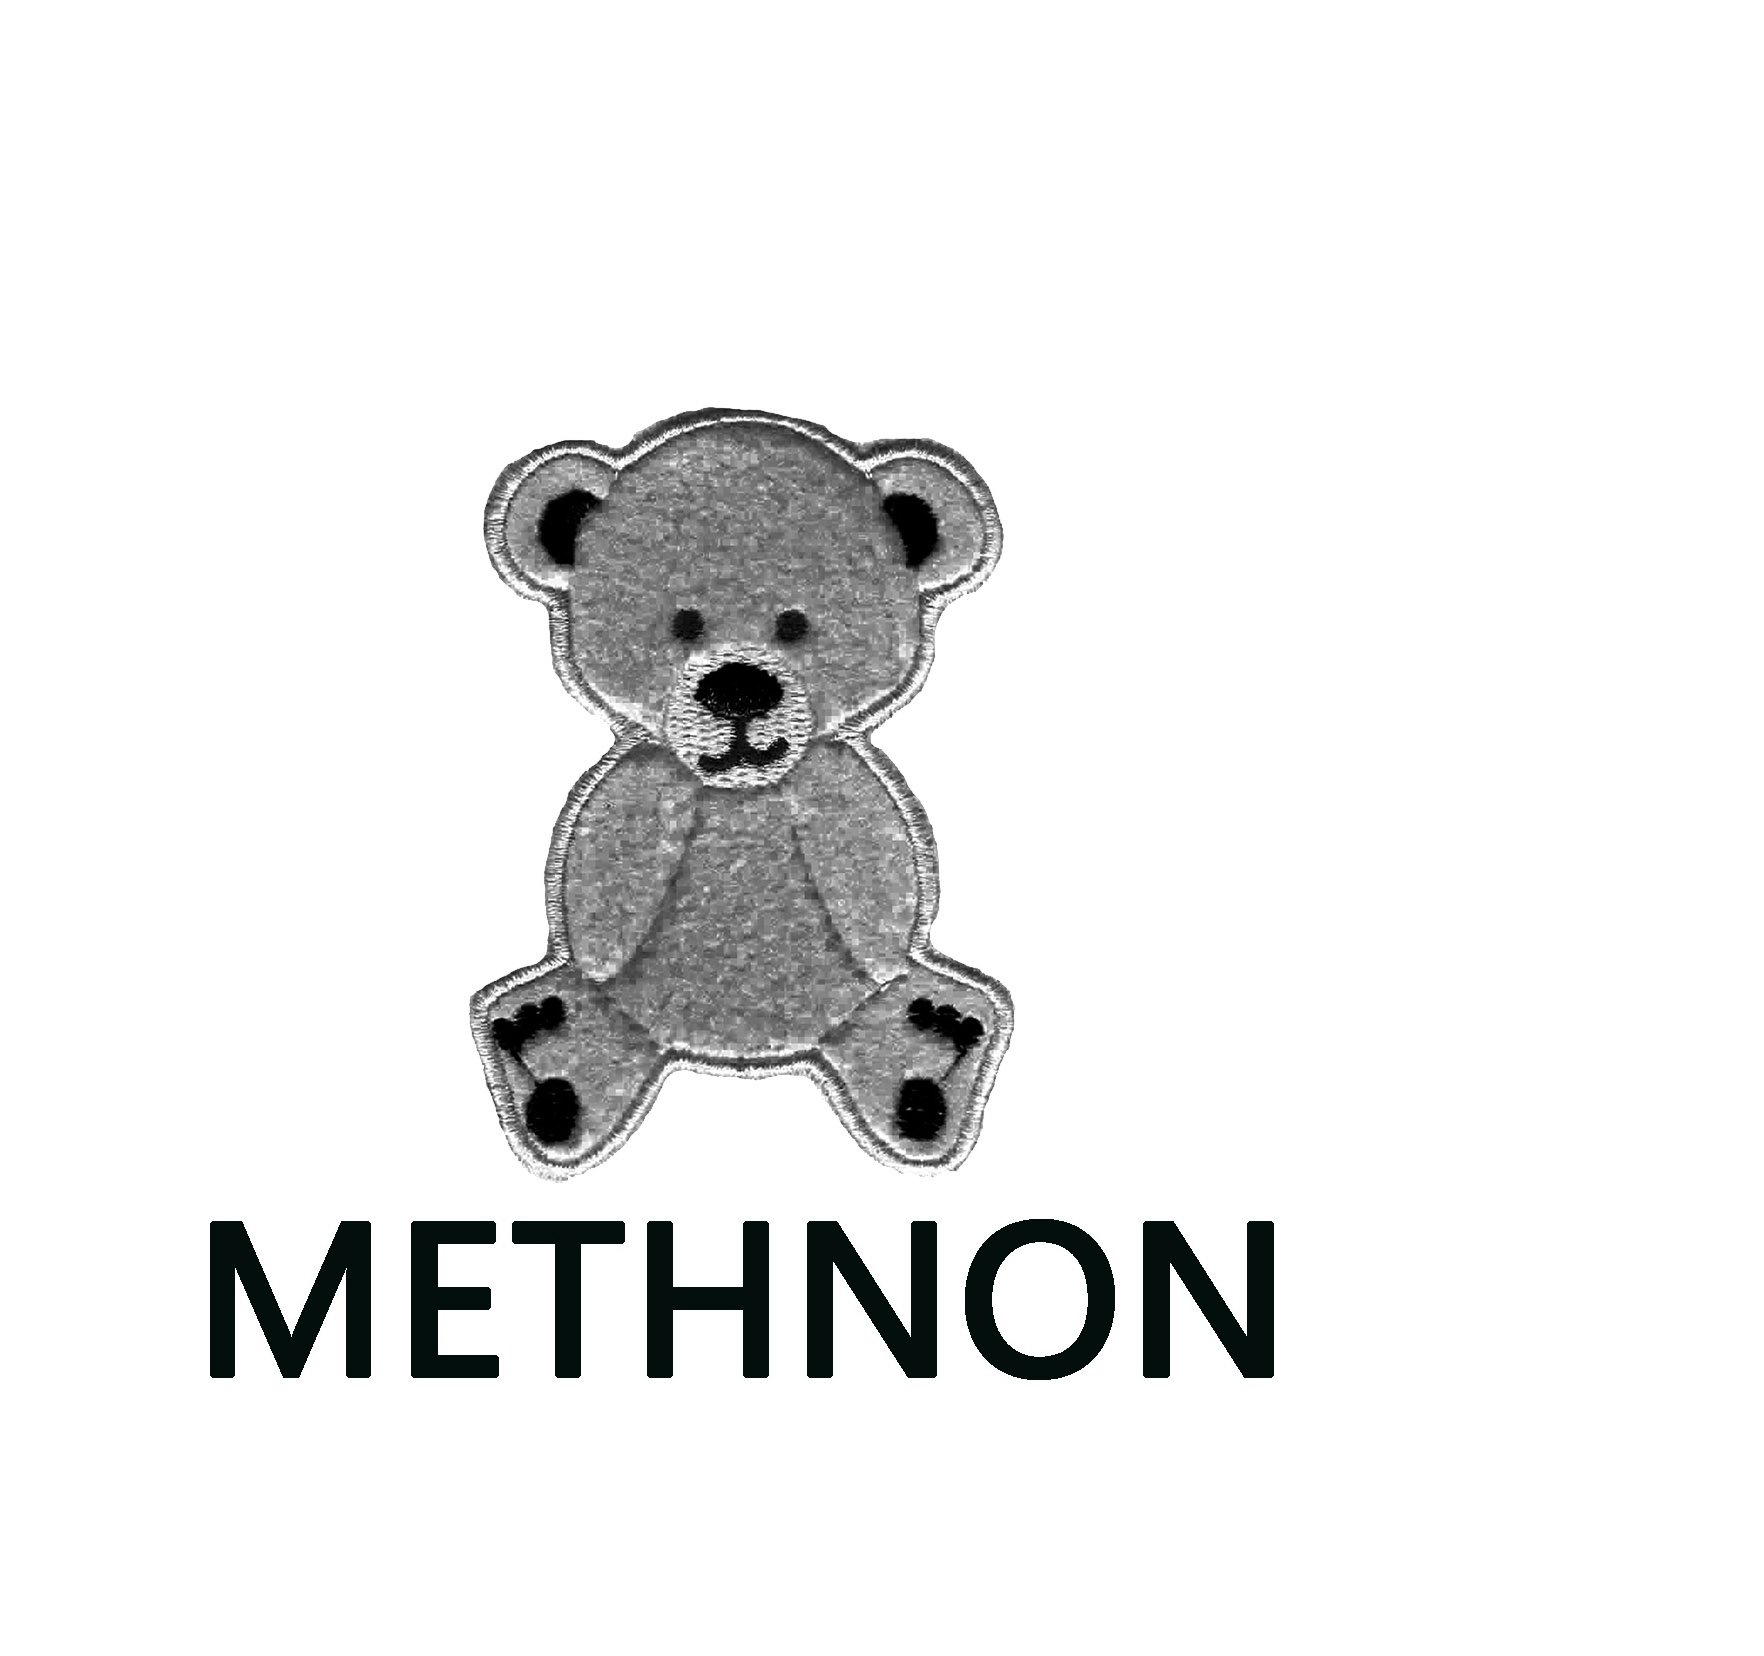  METHNON